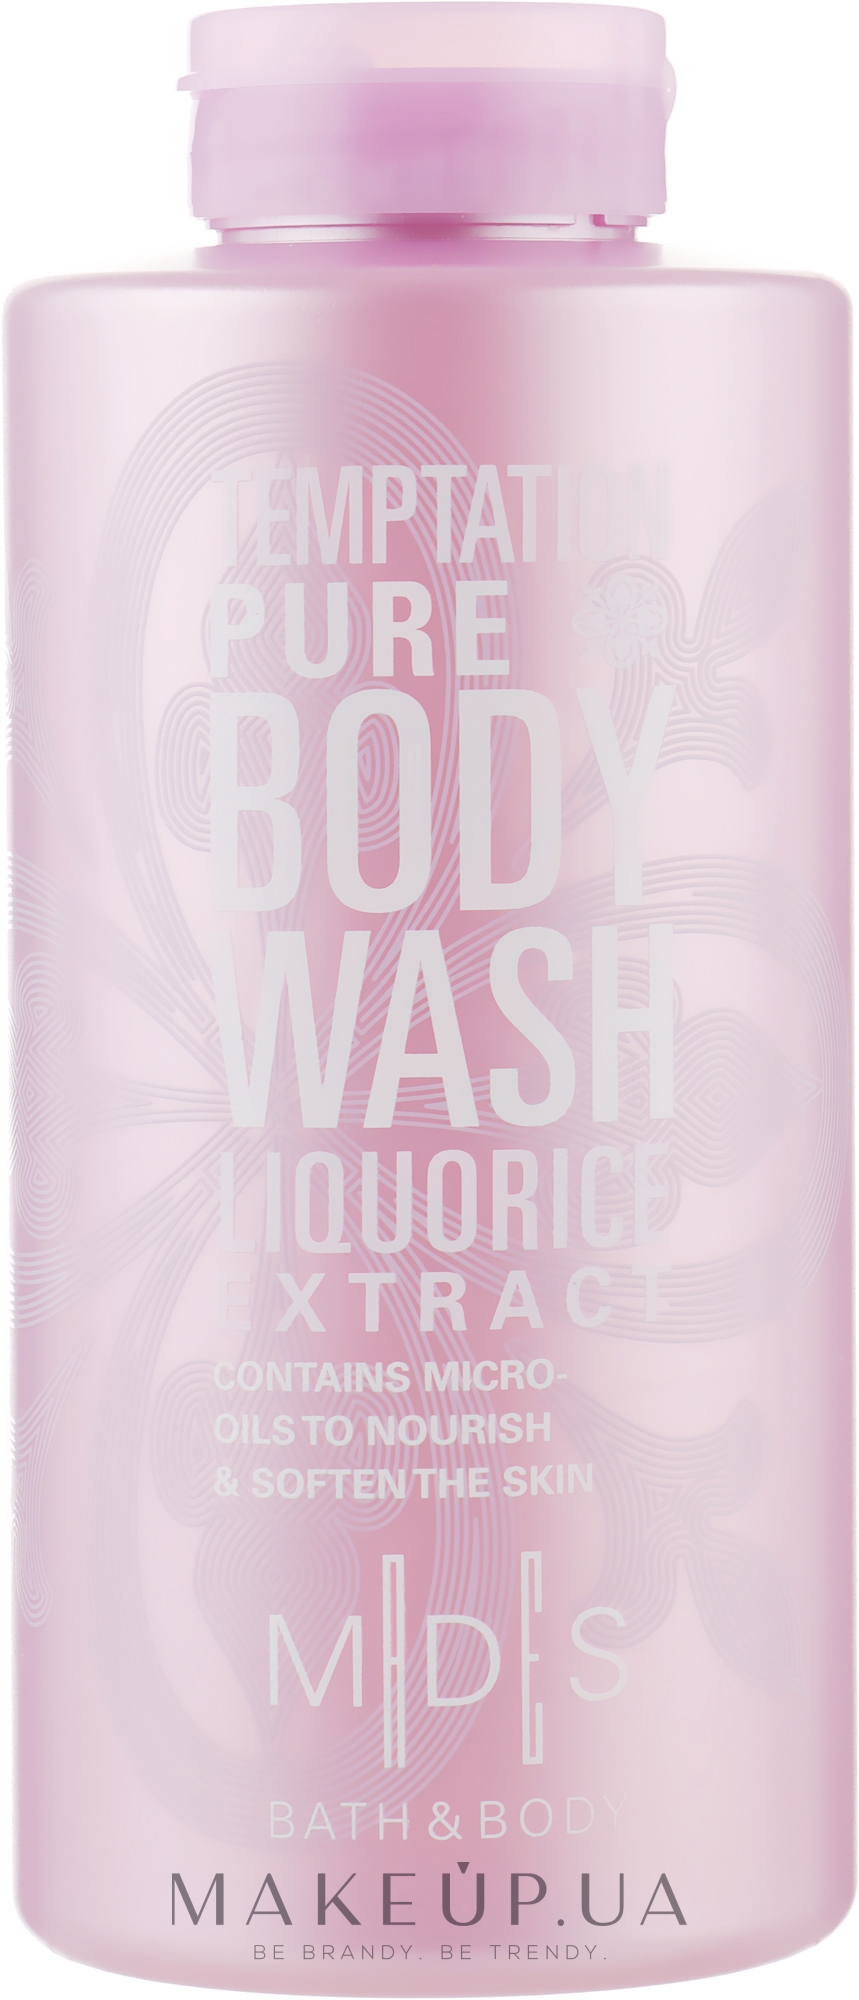 Гель для душу - Mades Cosmetics Bath & Body Temptation Pure Body Wash — фото 500ml